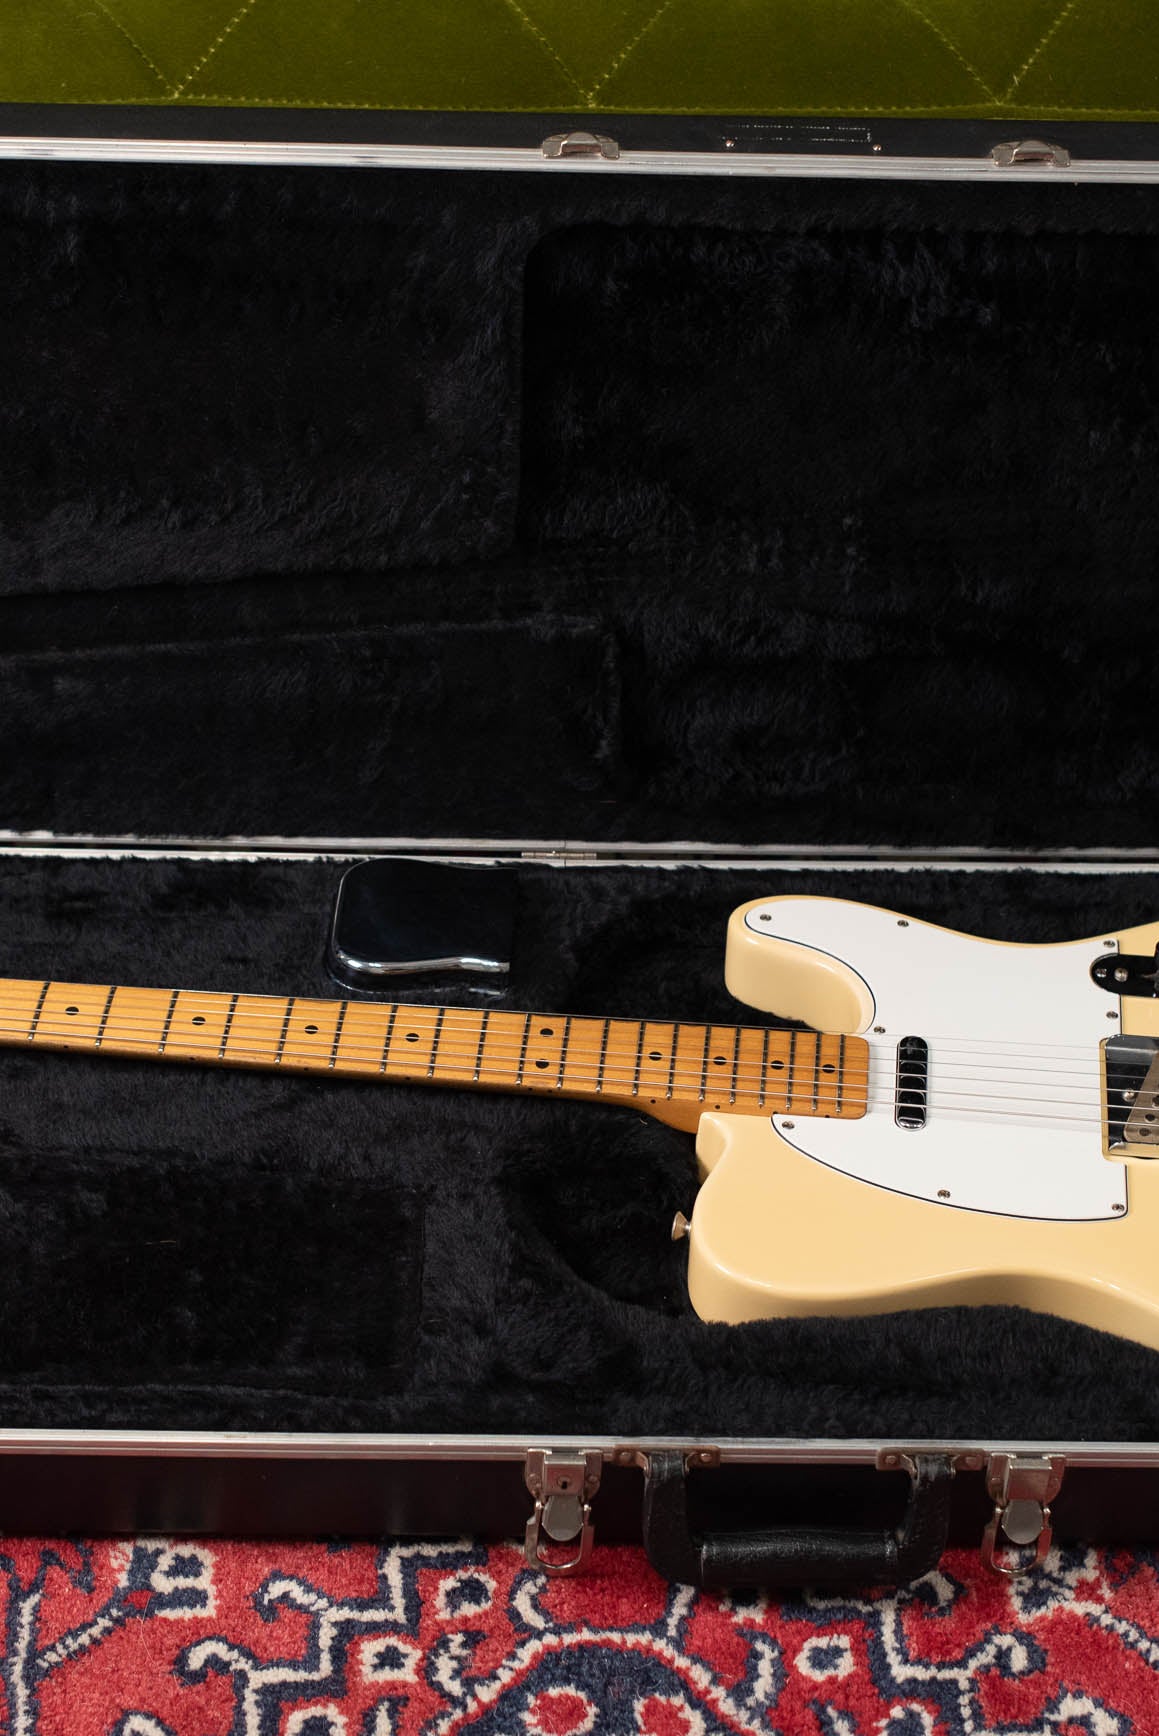 Fender Telecaster Dan Smith era 1982